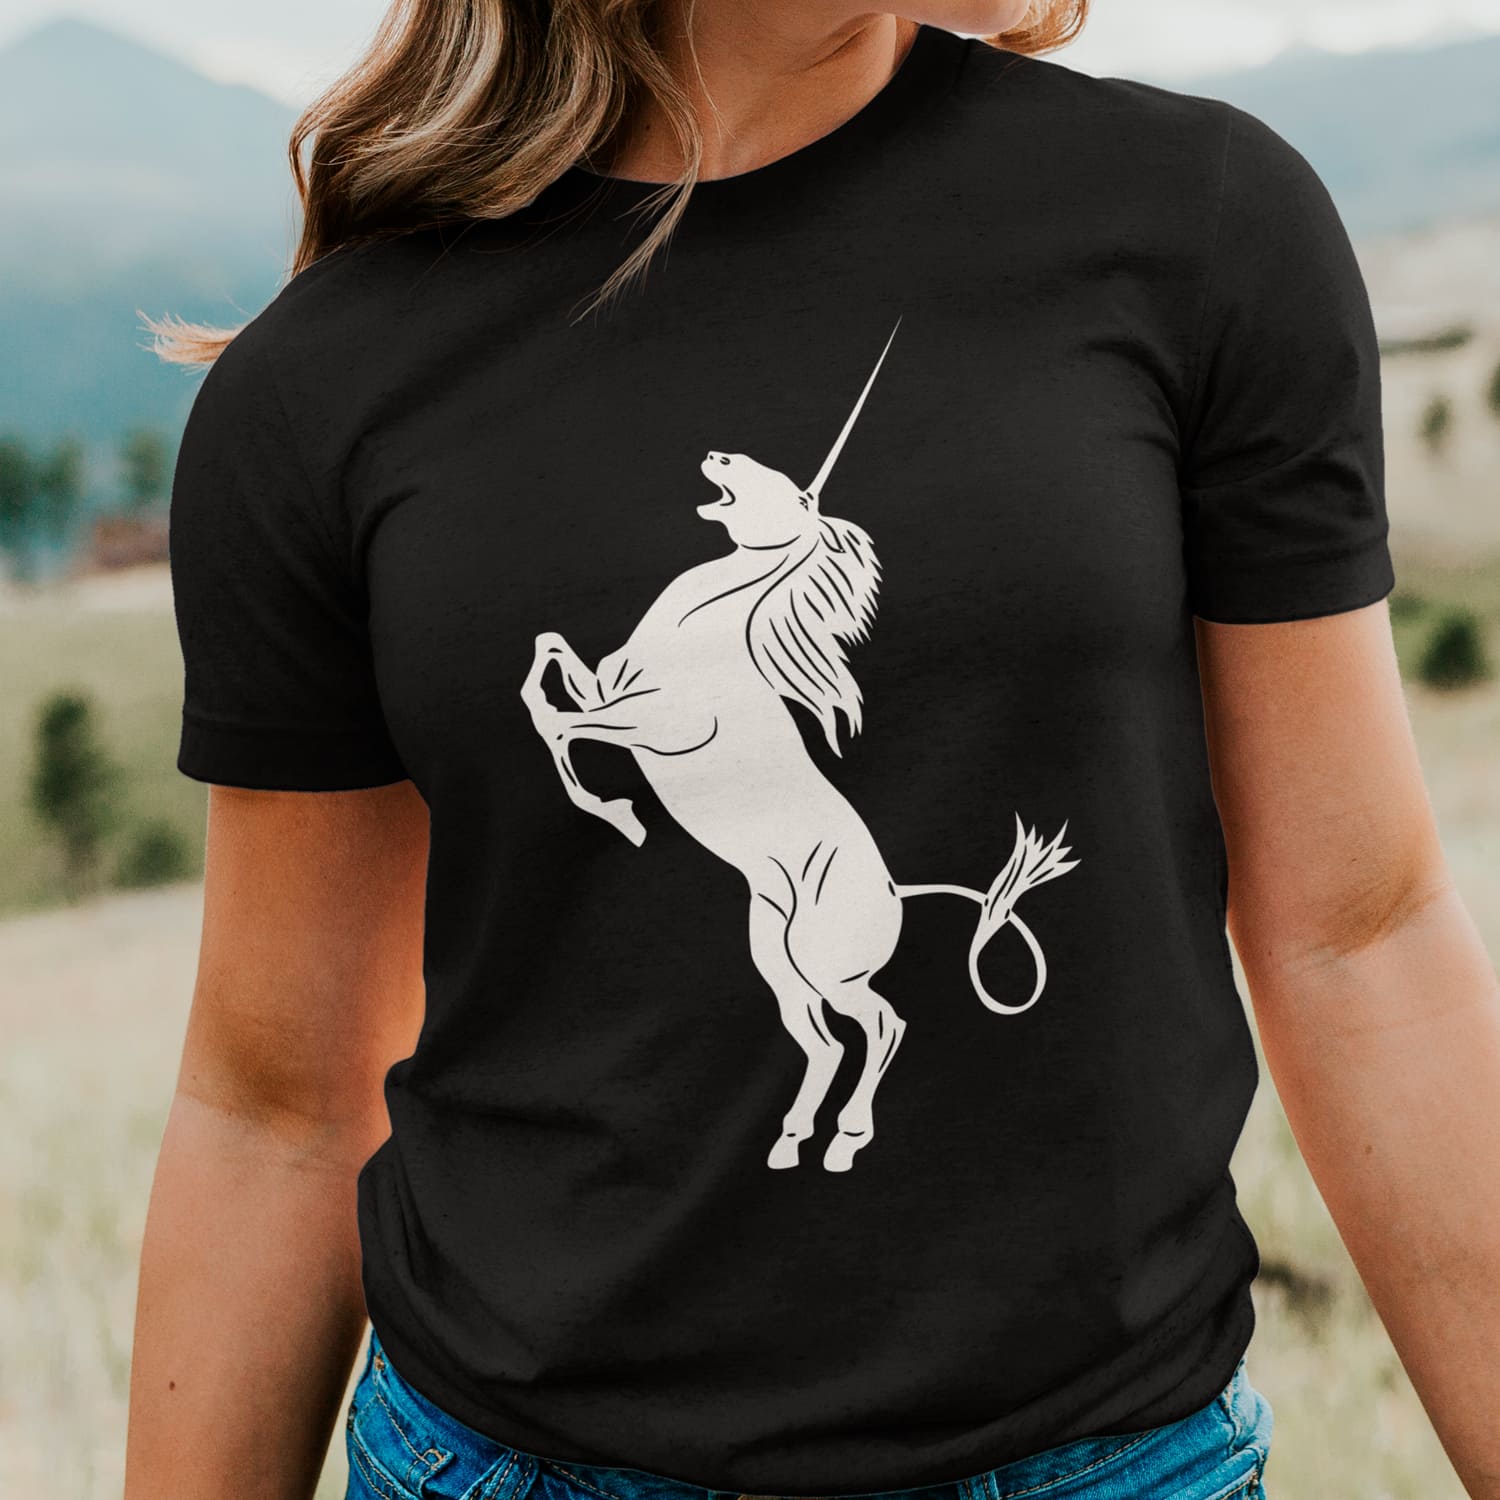 Black t-shirt with white unicorn silhouette.